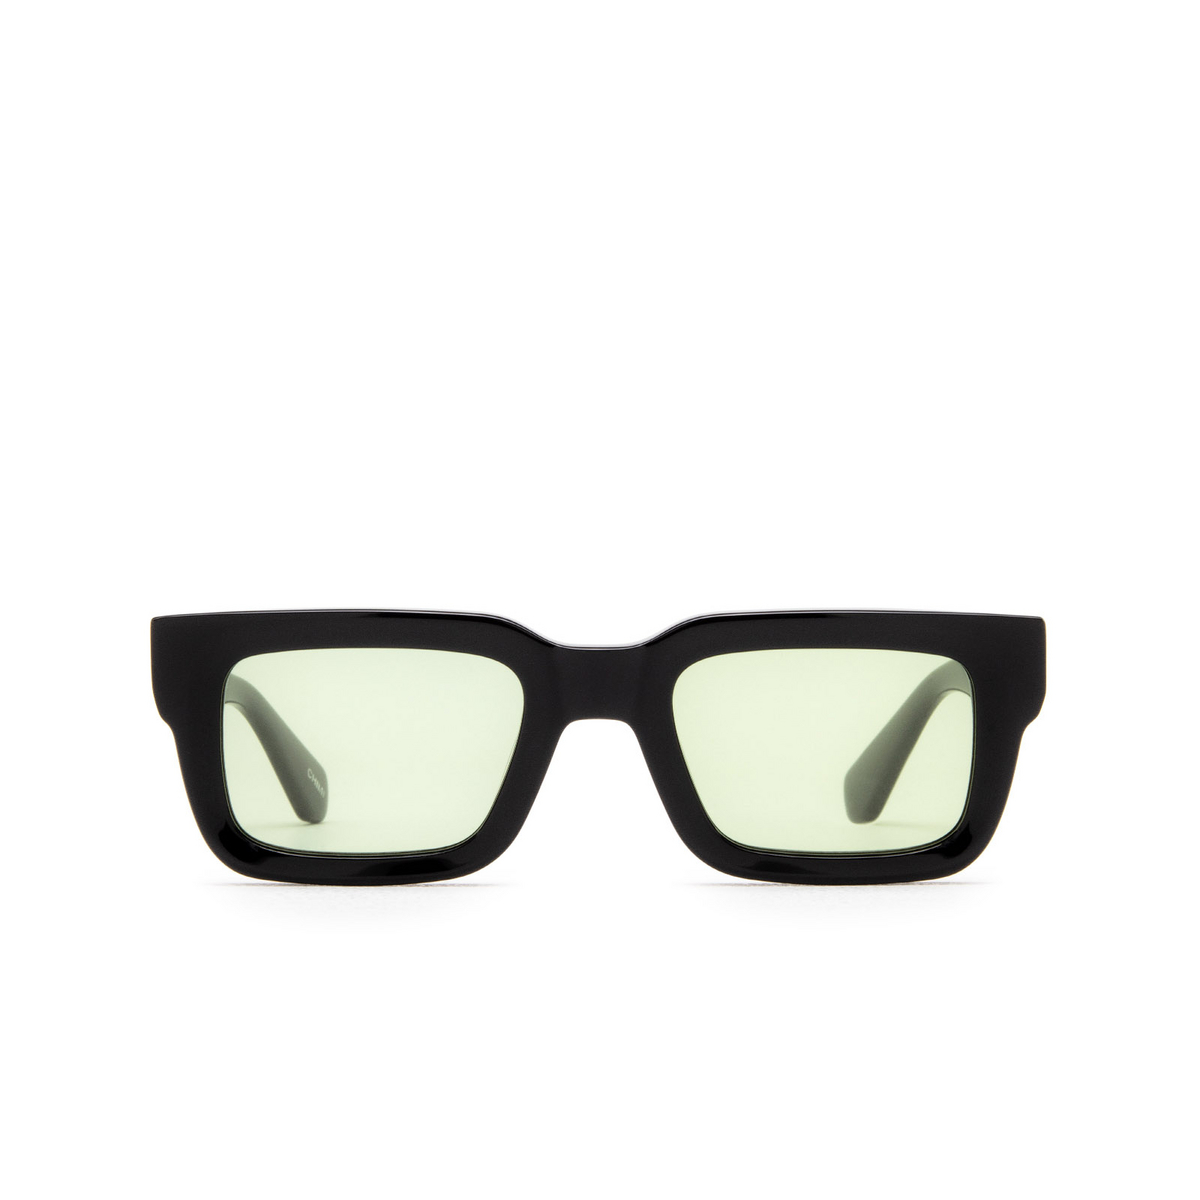 Chimi 05 Sunglasses BLACK GREEN - 1/4